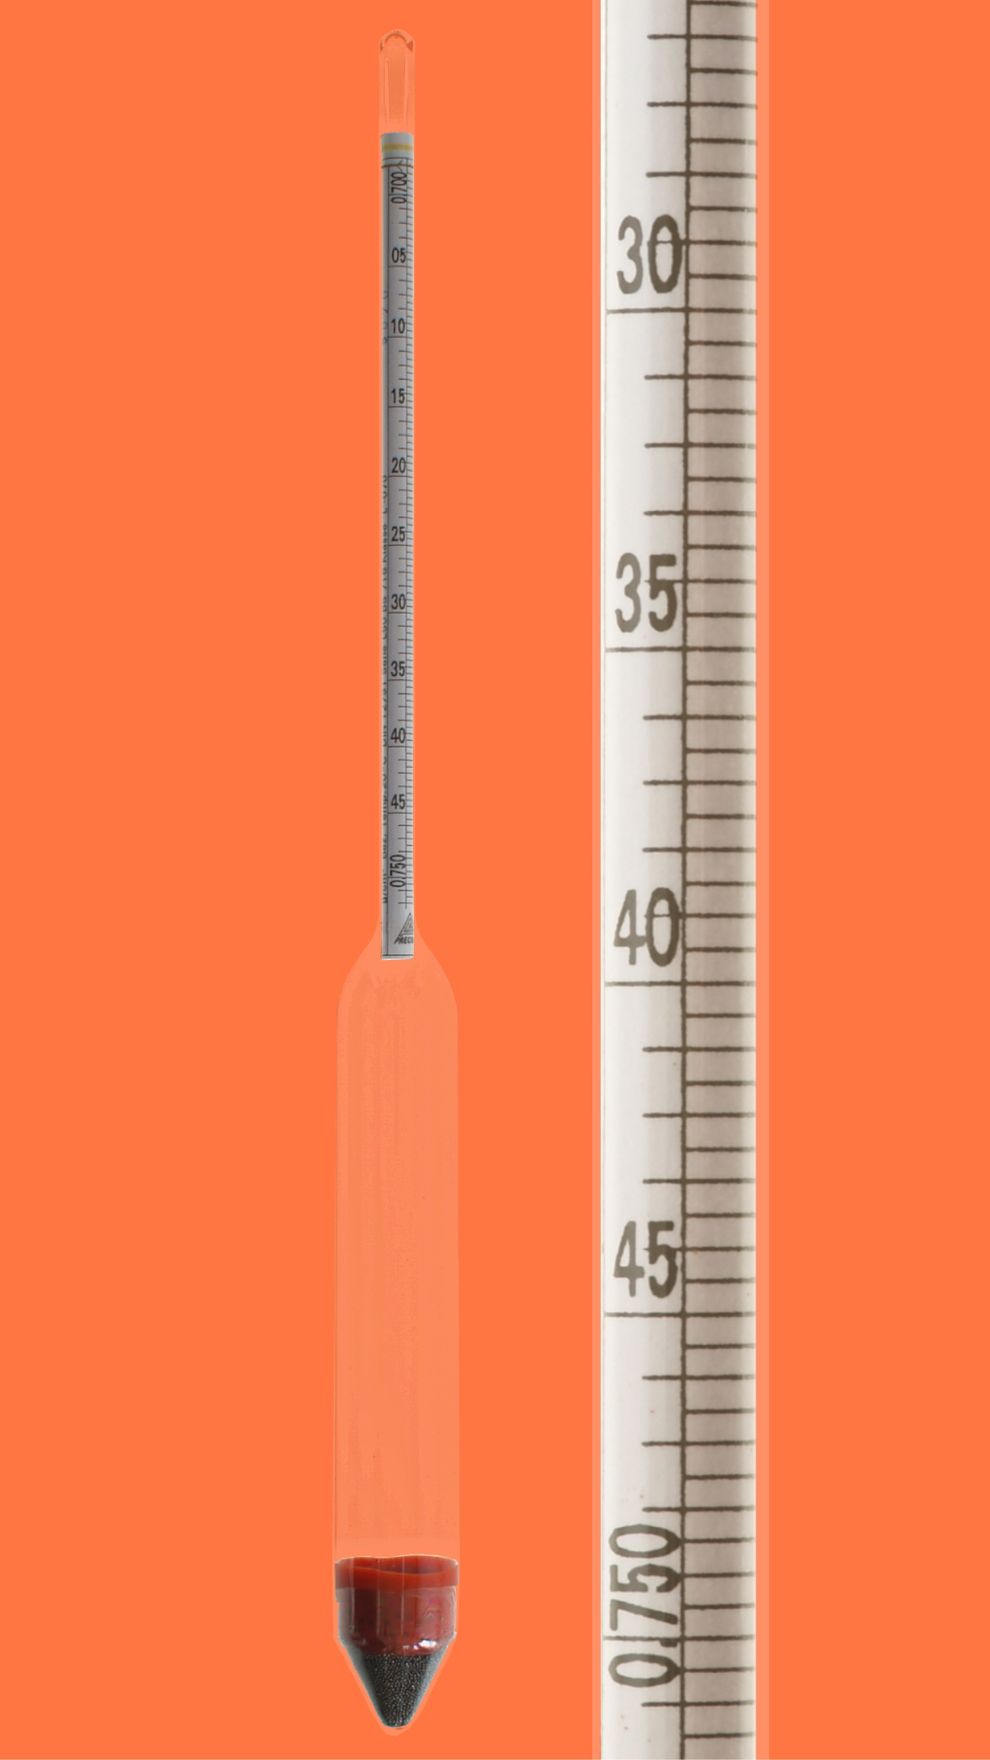 Aräometer, DIN 12791, L50, 1,95-2,00:0,0005g/cm³, Bezugstemp. 20°C, ohne Thermometer